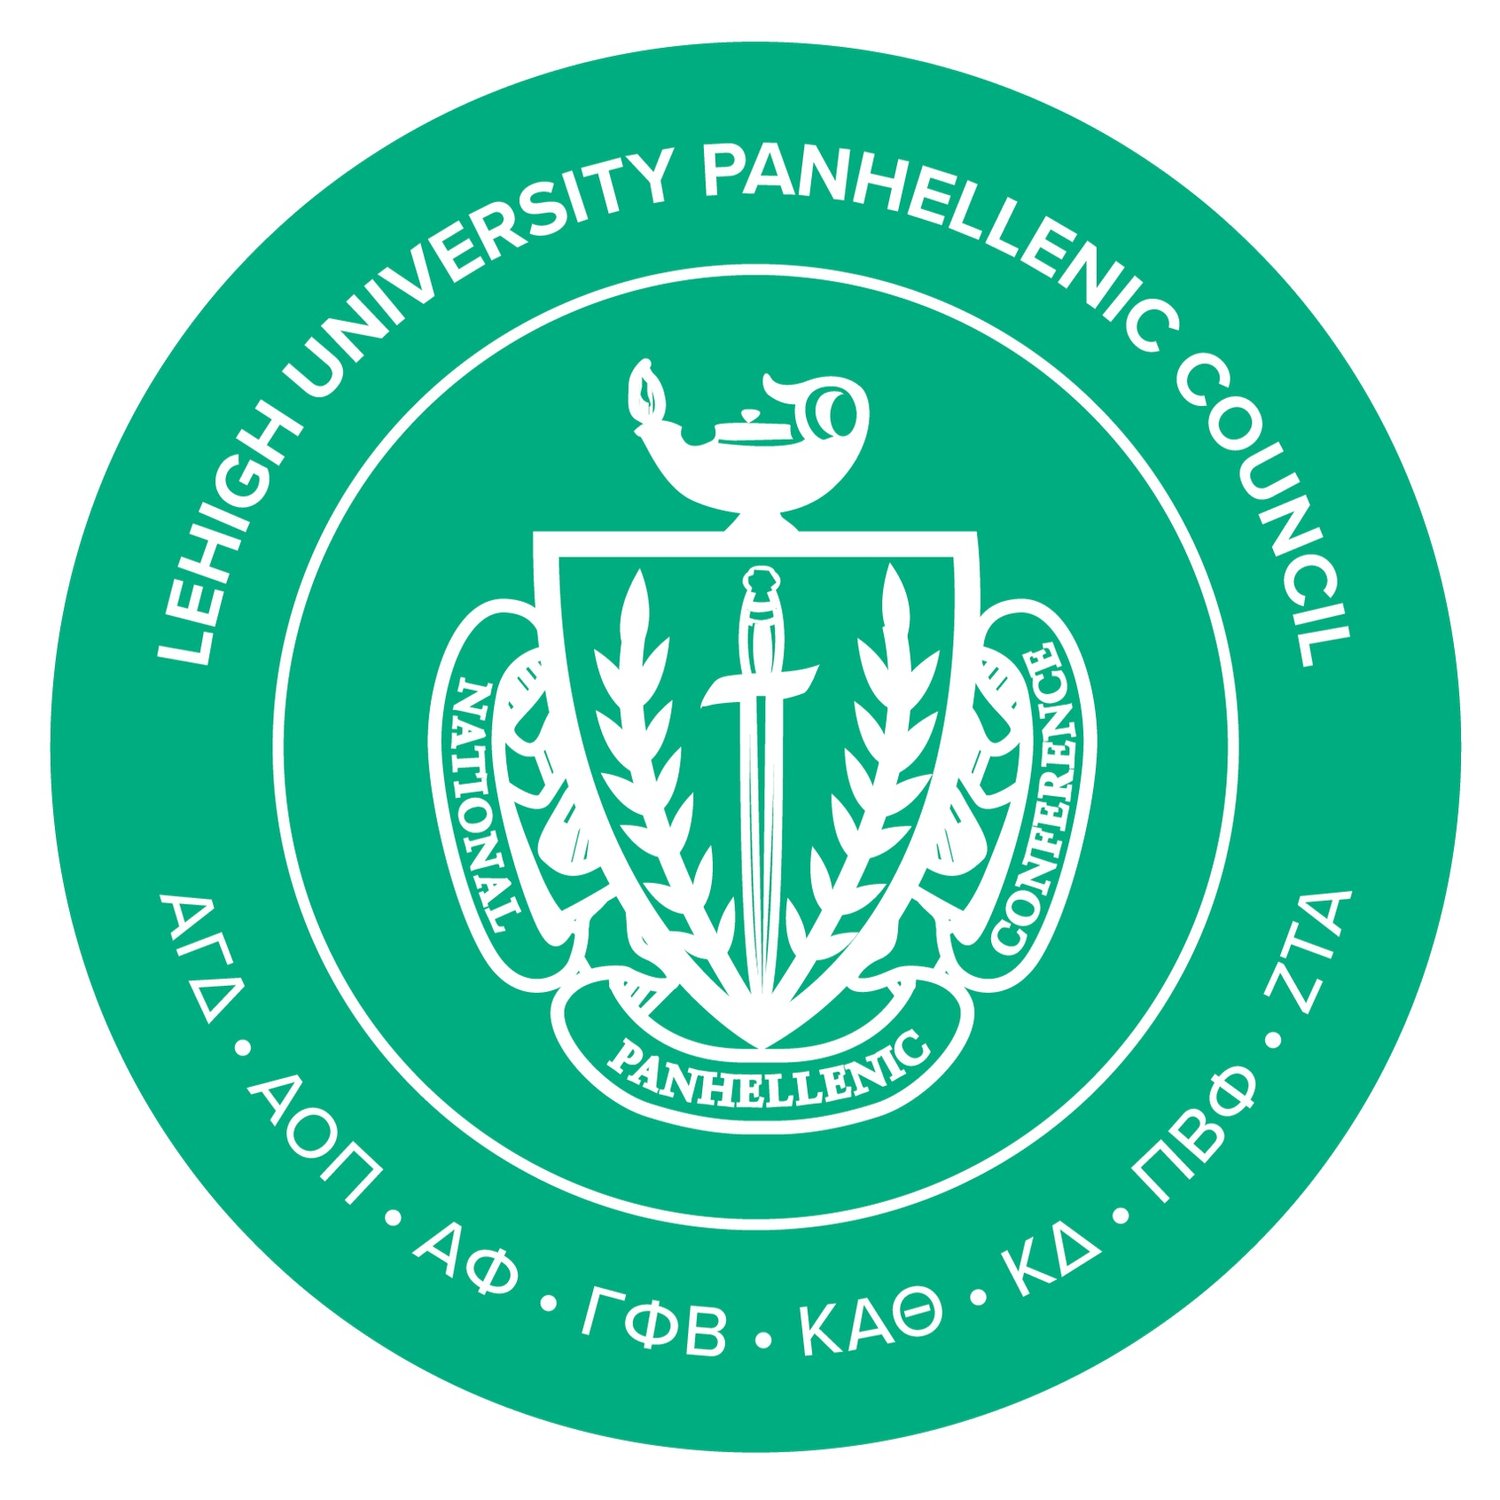 Lehigh University Panhellenic Council